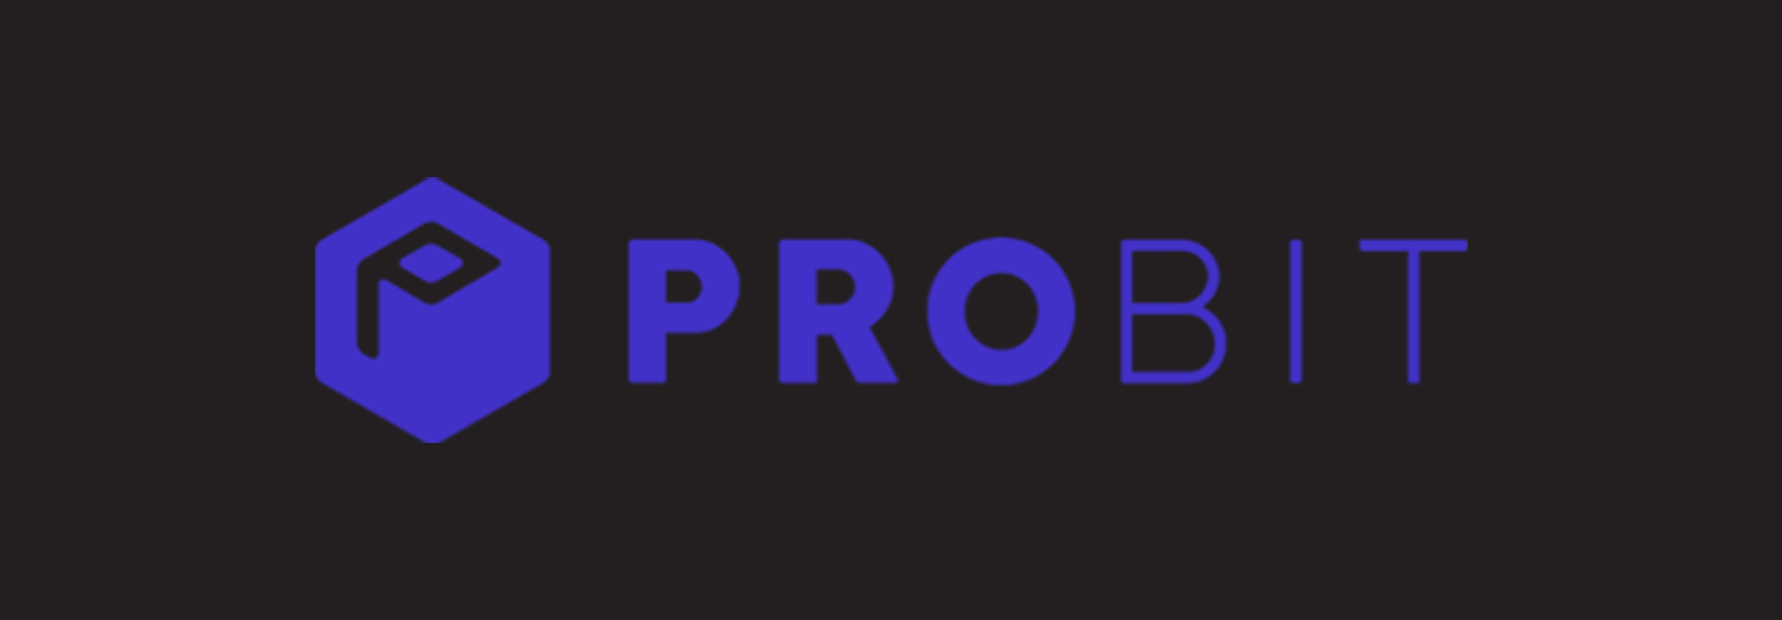 probit-logo.jpg